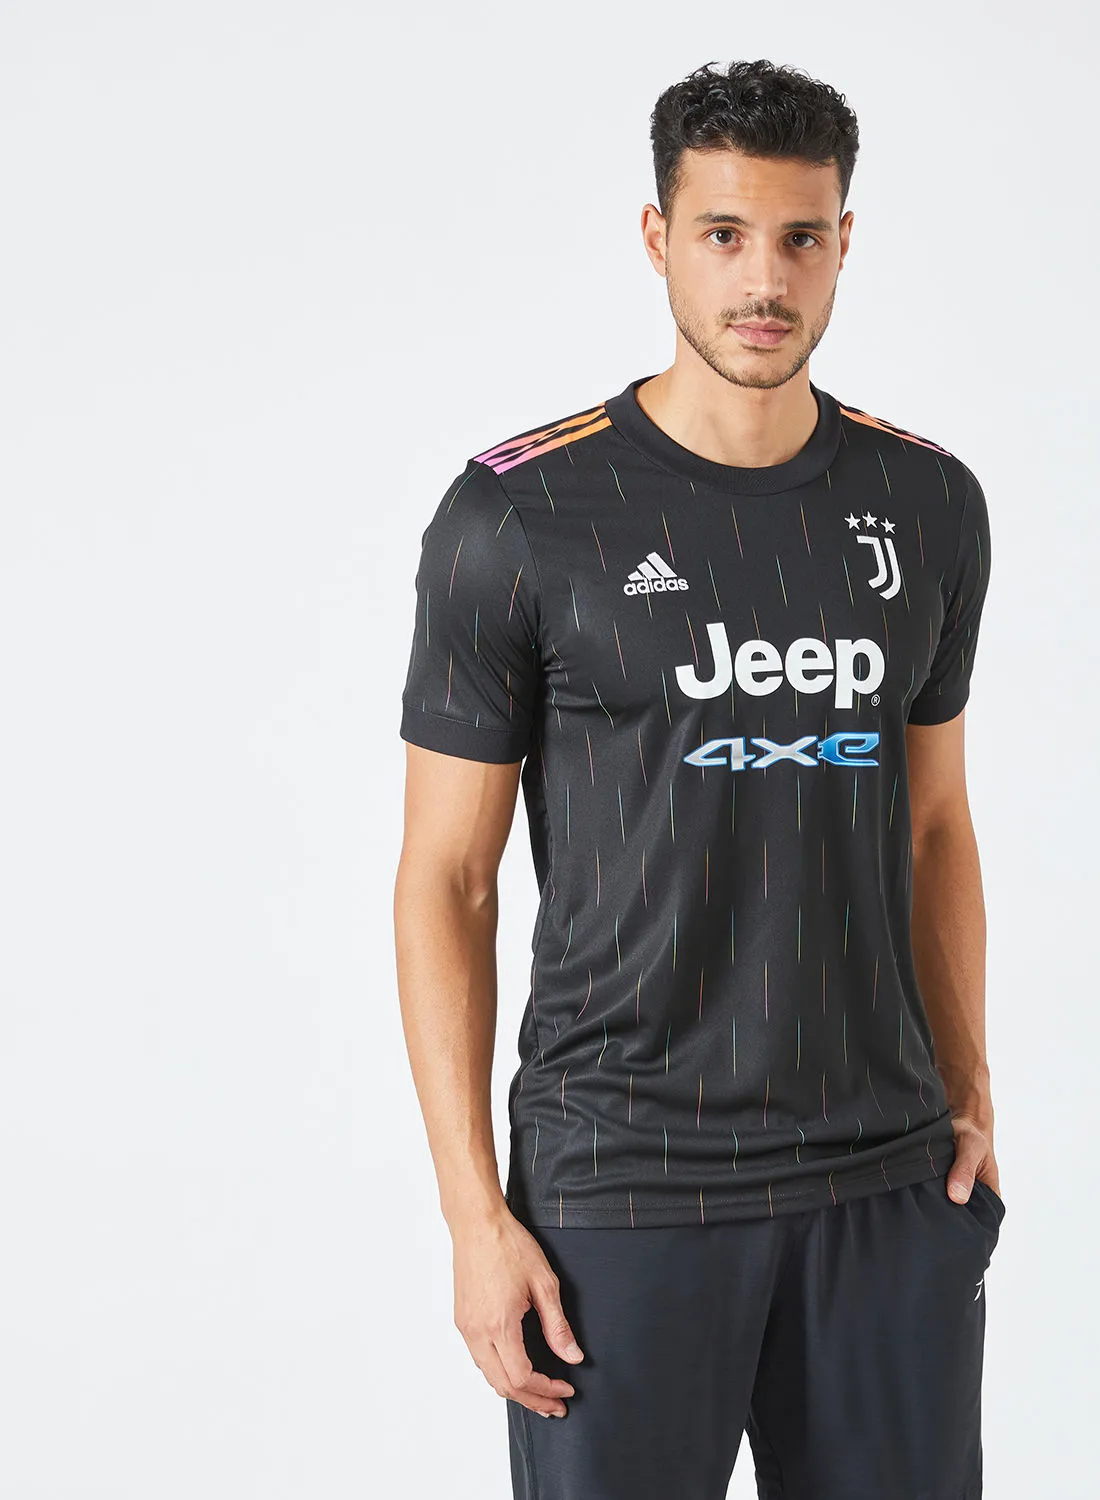 Adidas Juventus Football Club 2021/22 Away Jersey Black